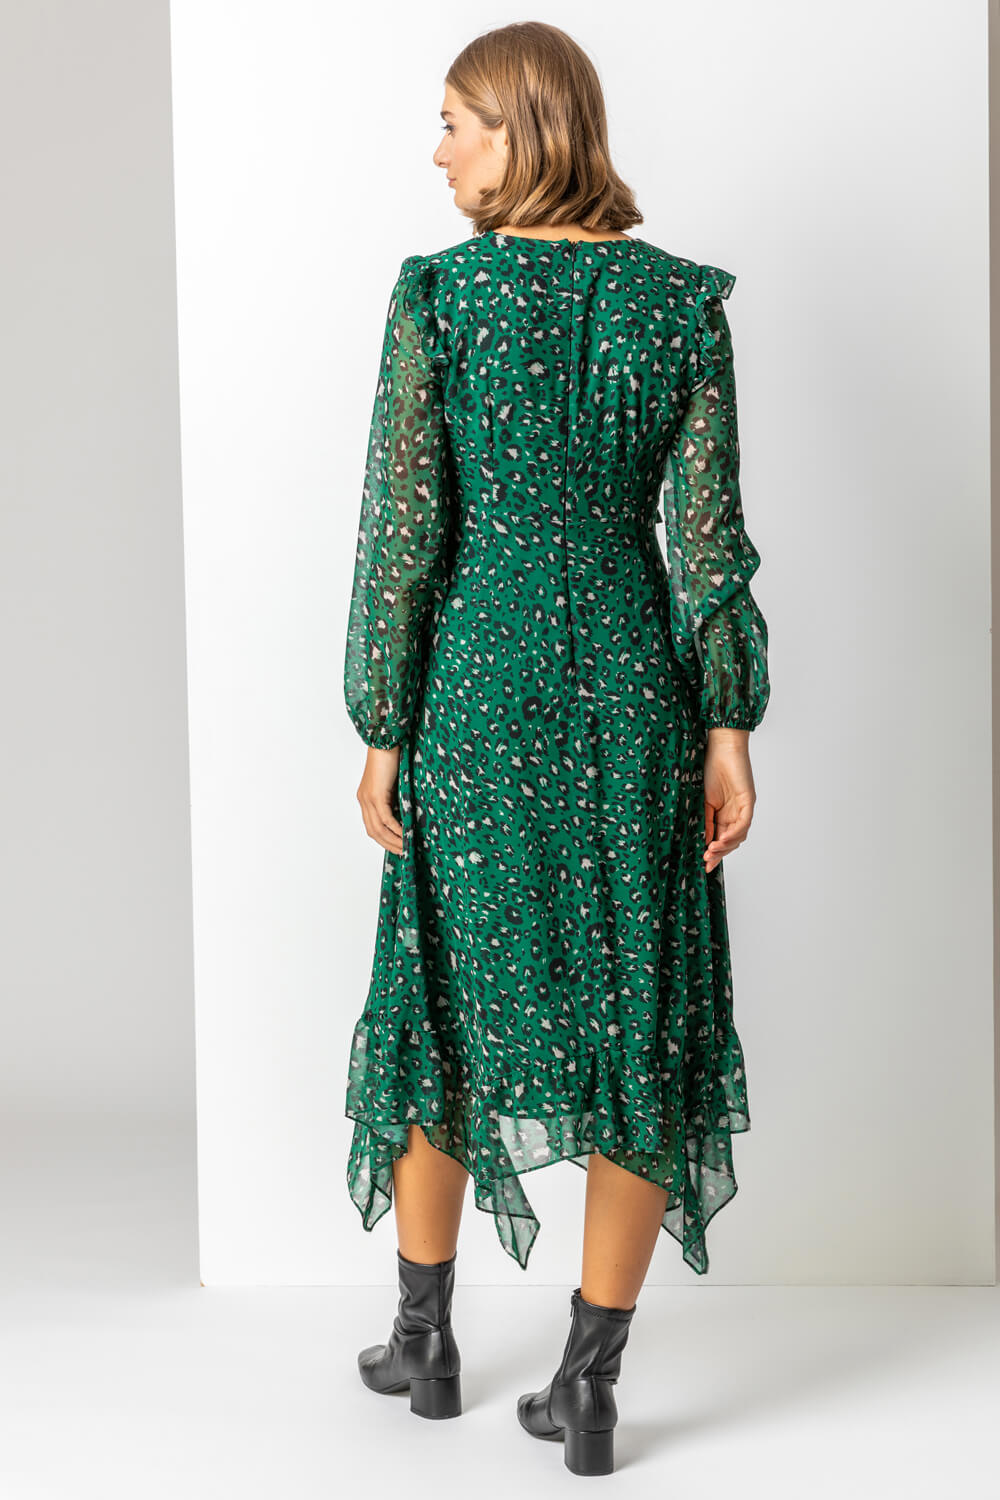 Green Animal Print Chiffon Midi Dress, Image 2 of 5